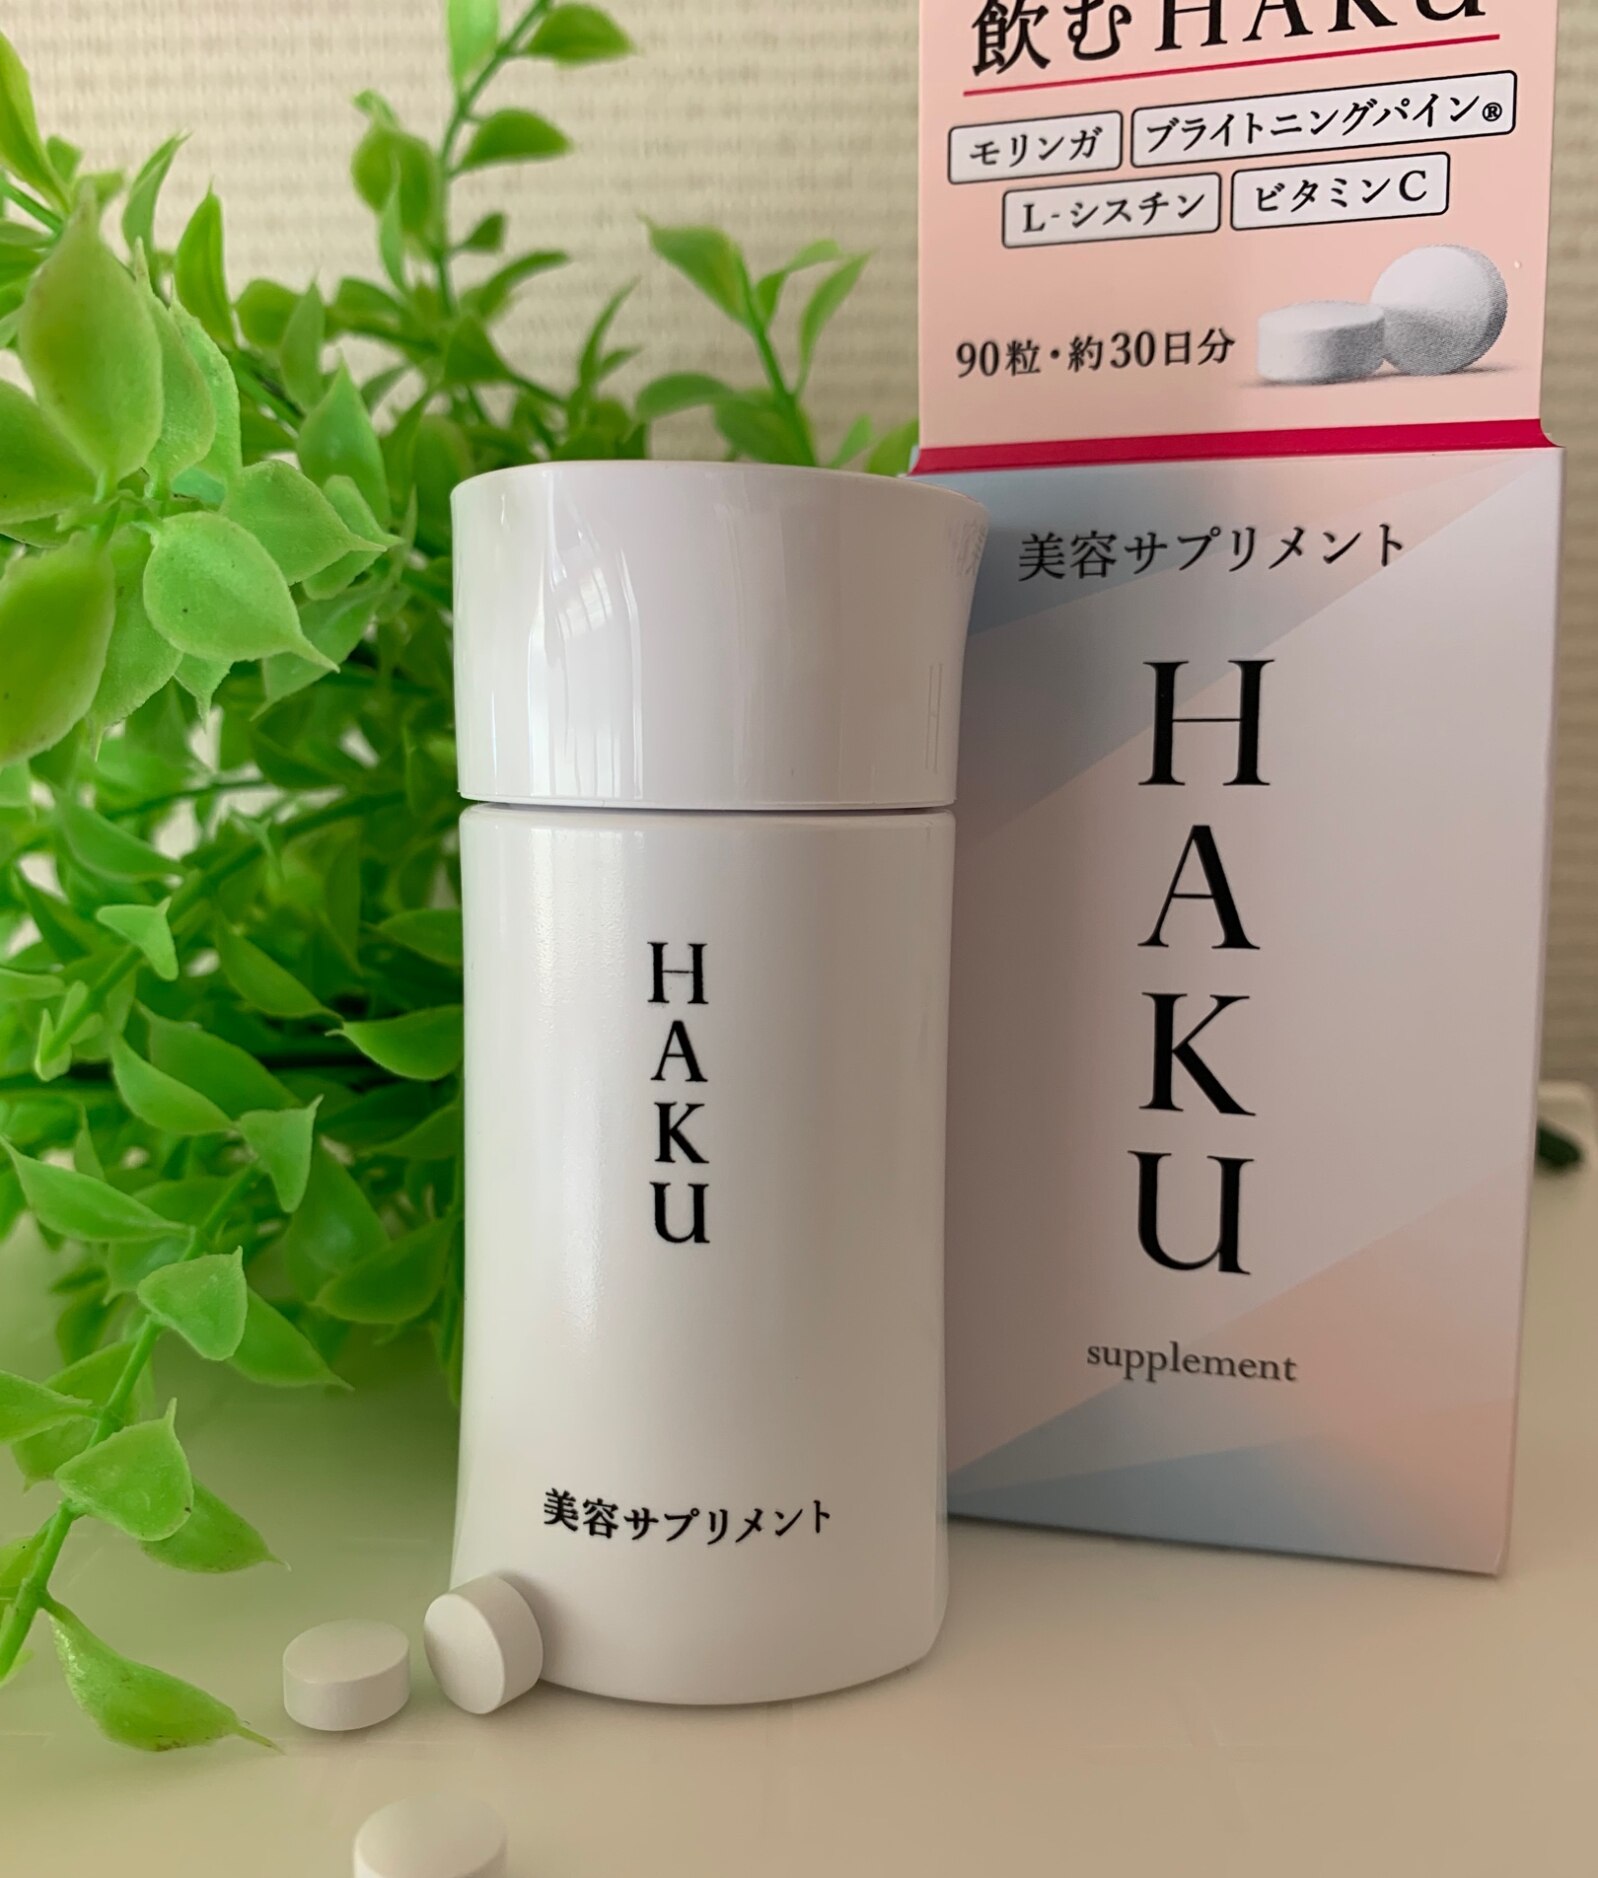 ☆HAKU 美容サプリメント90粒× 3箱 ハク - 基礎化粧品